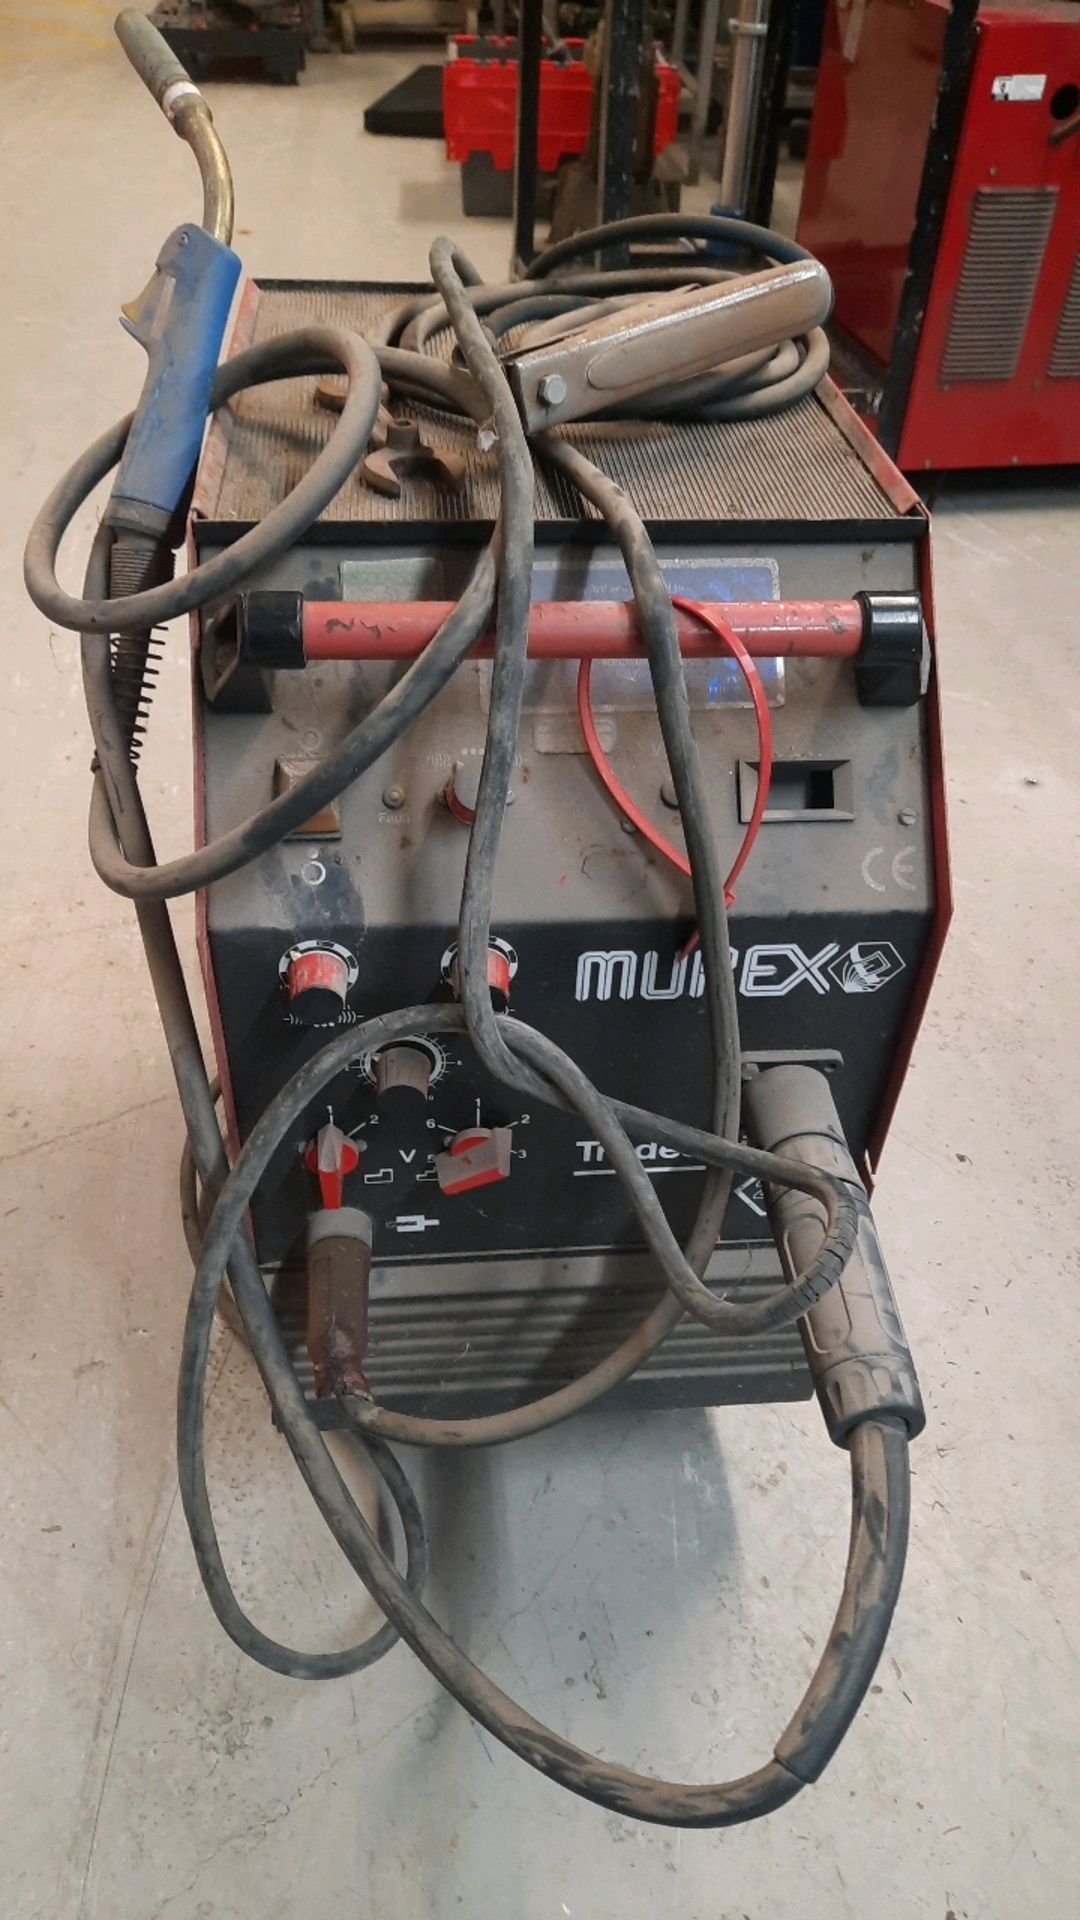 Murex Tradesmig 251 Welding Machine - Image 4 of 5